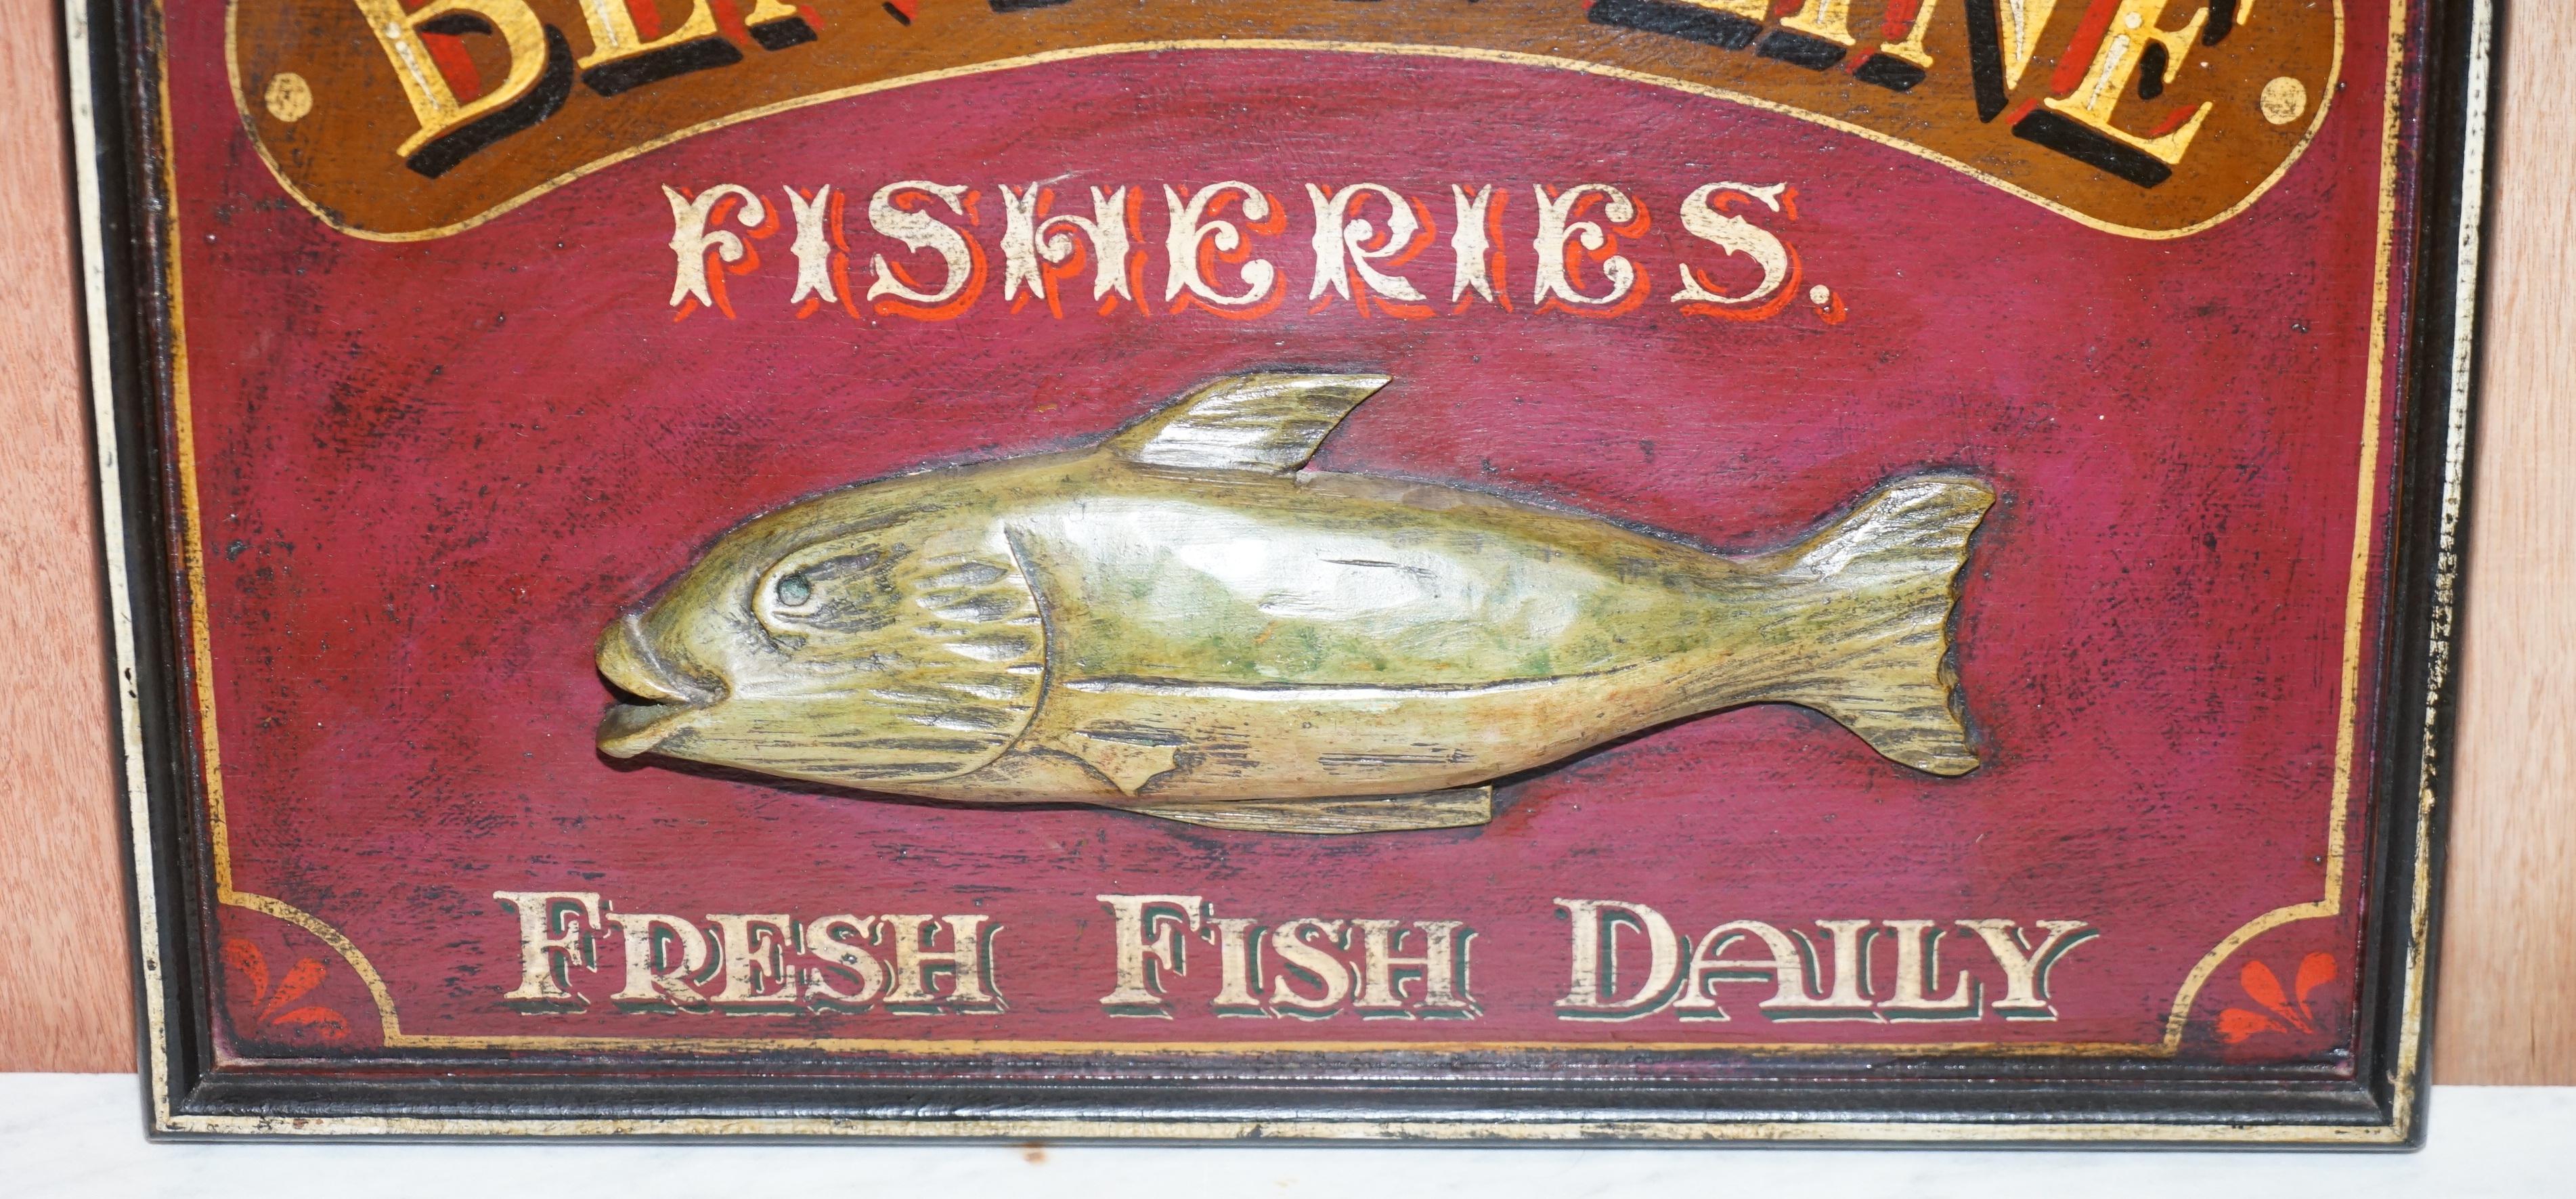 fishers billboards